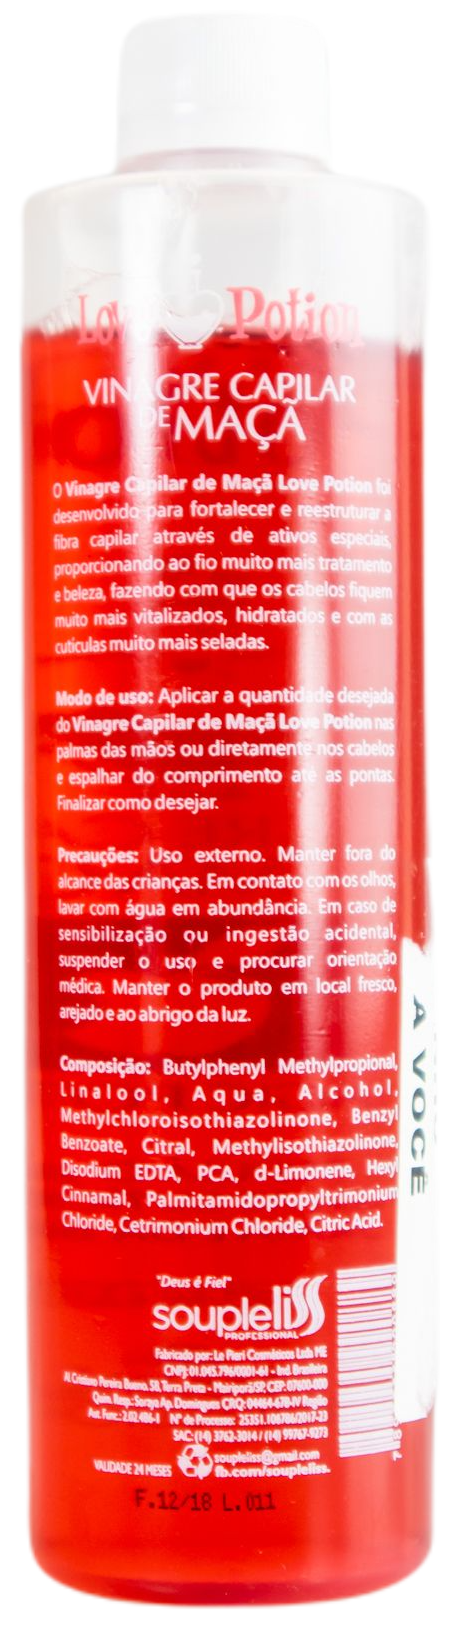 Love Potion Brazilian Keratin Treatment Brazilian Magic Potion Apple Capillary Vinegar Treatment 500ml - Love Potion